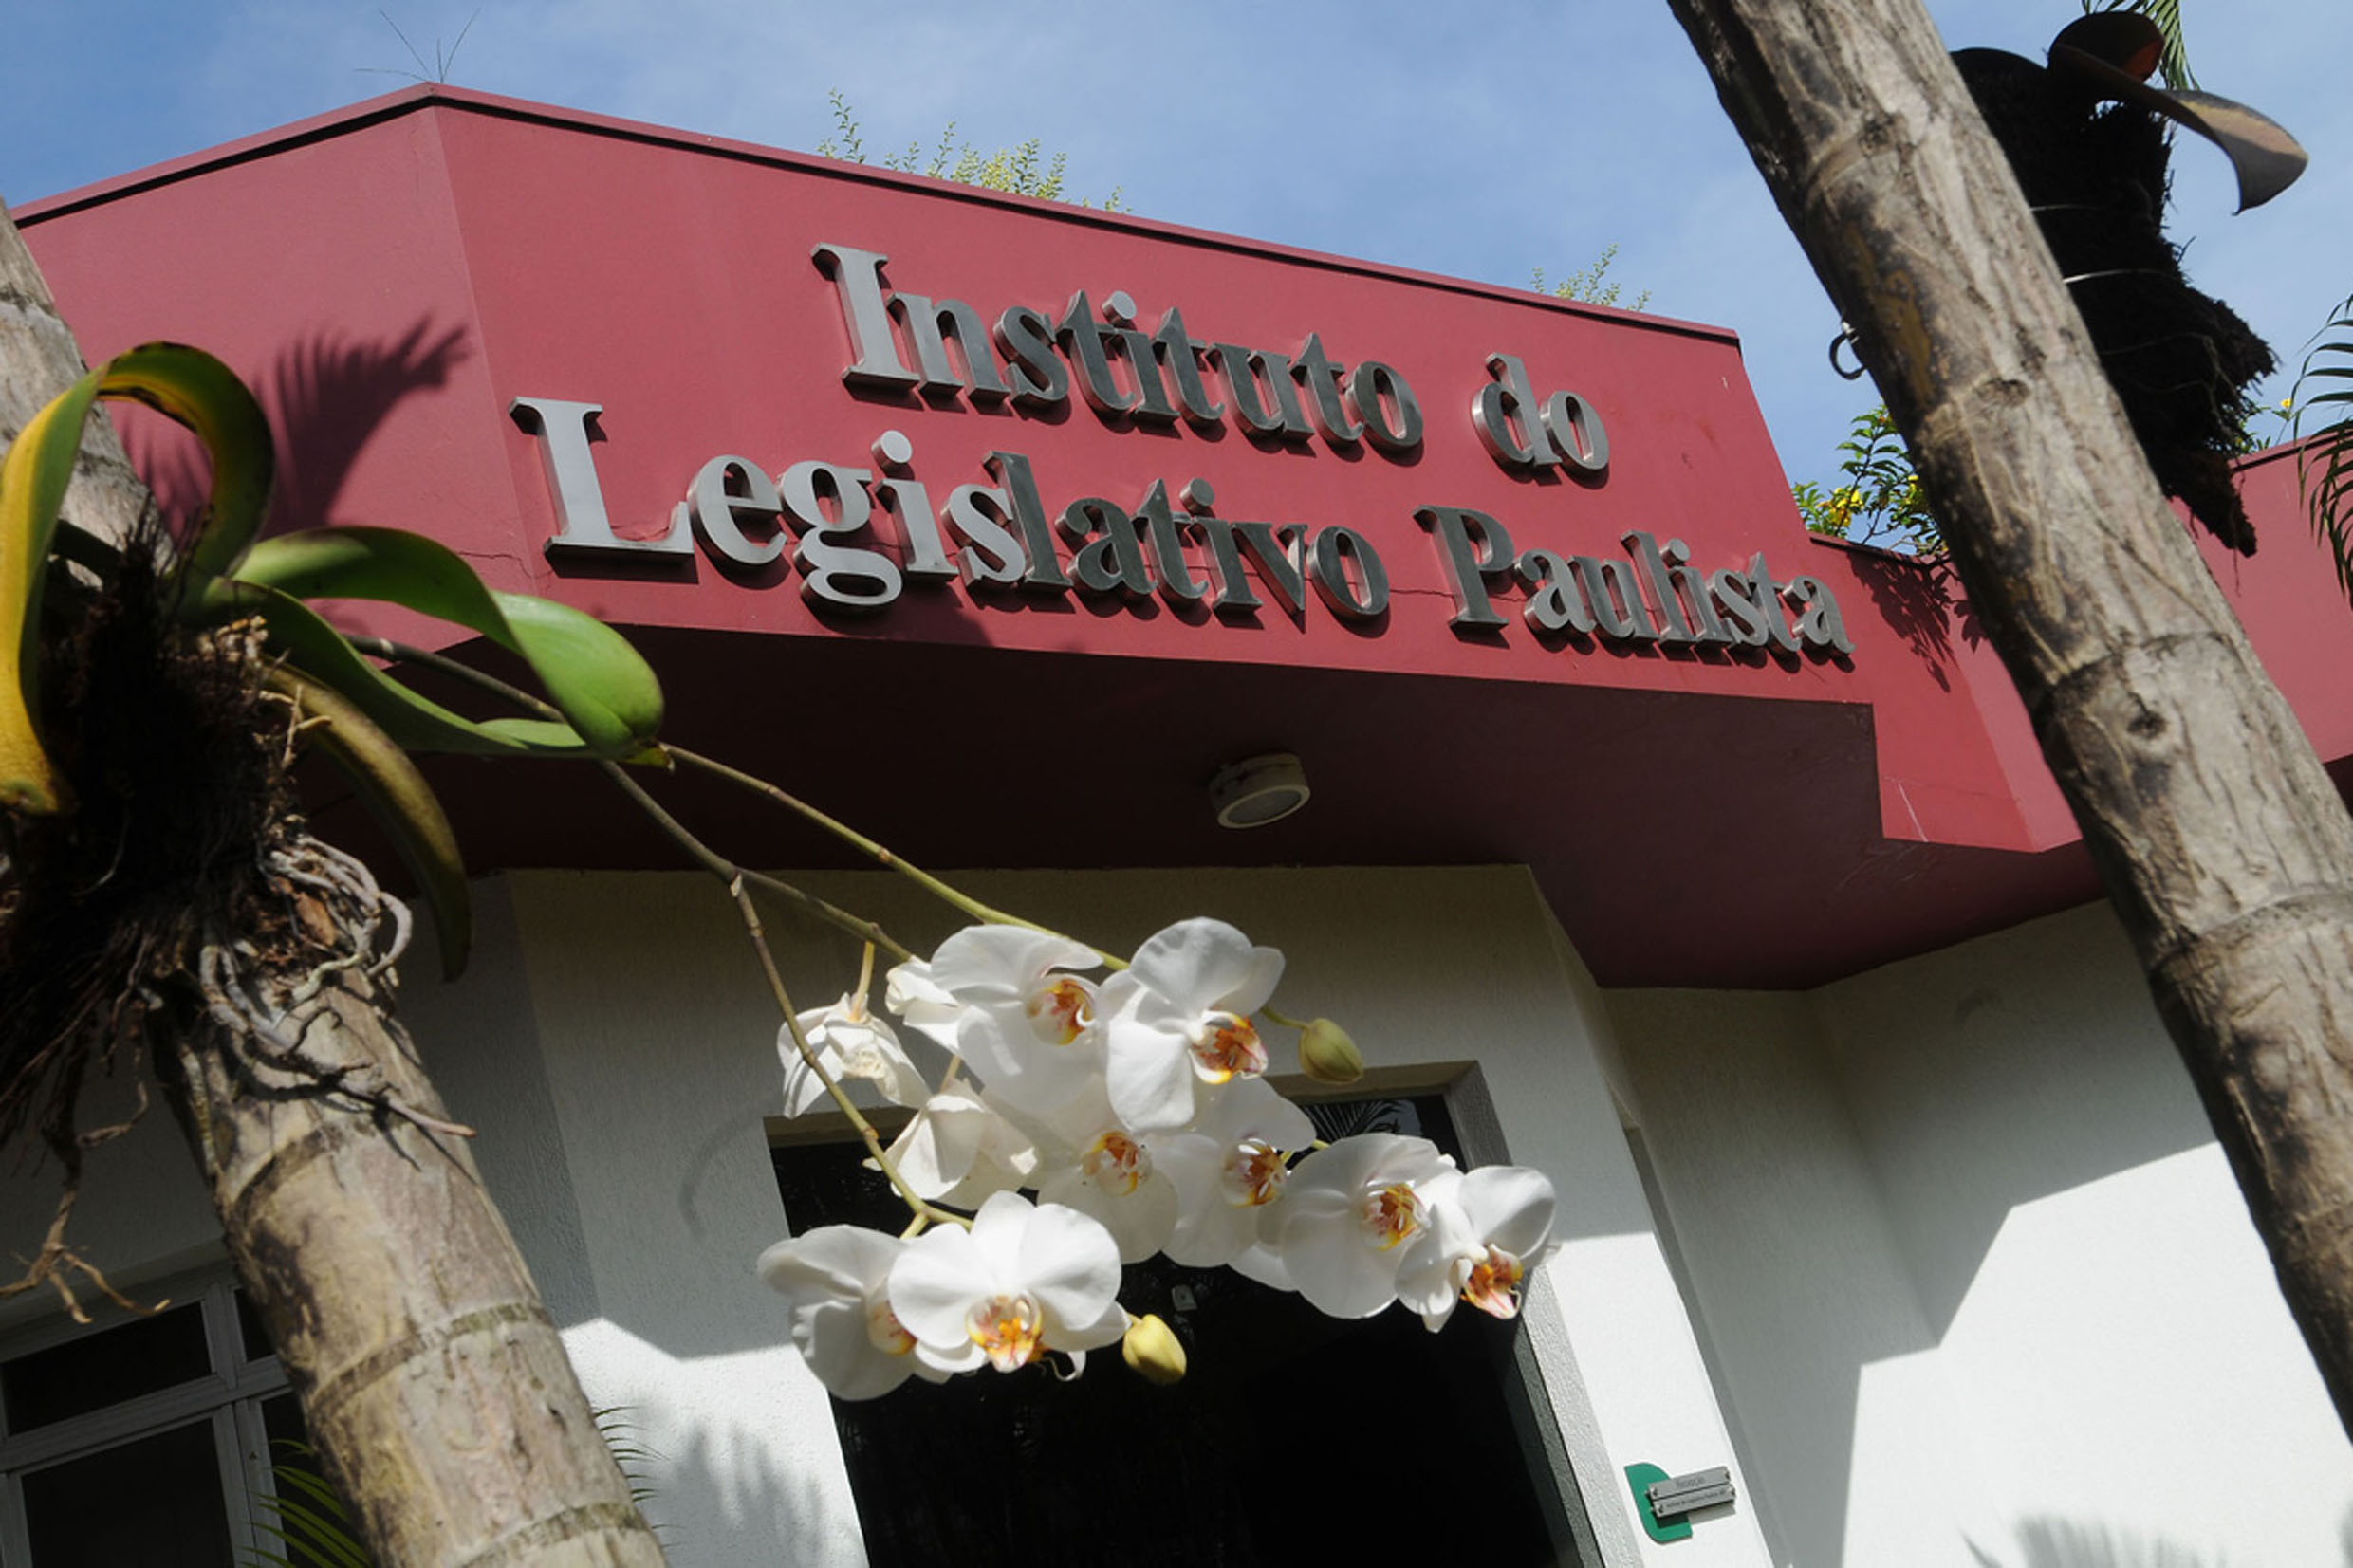 Instituto do Legislativo Paulista<a style='float:right;color:#ccc' href='https://www3.al.sp.gov.br/repositorio/noticia/N-08-2017/fg207263.jpg' target=_blank><i class='bi bi-zoom-in'></i> Clique para ver a imagem </a>